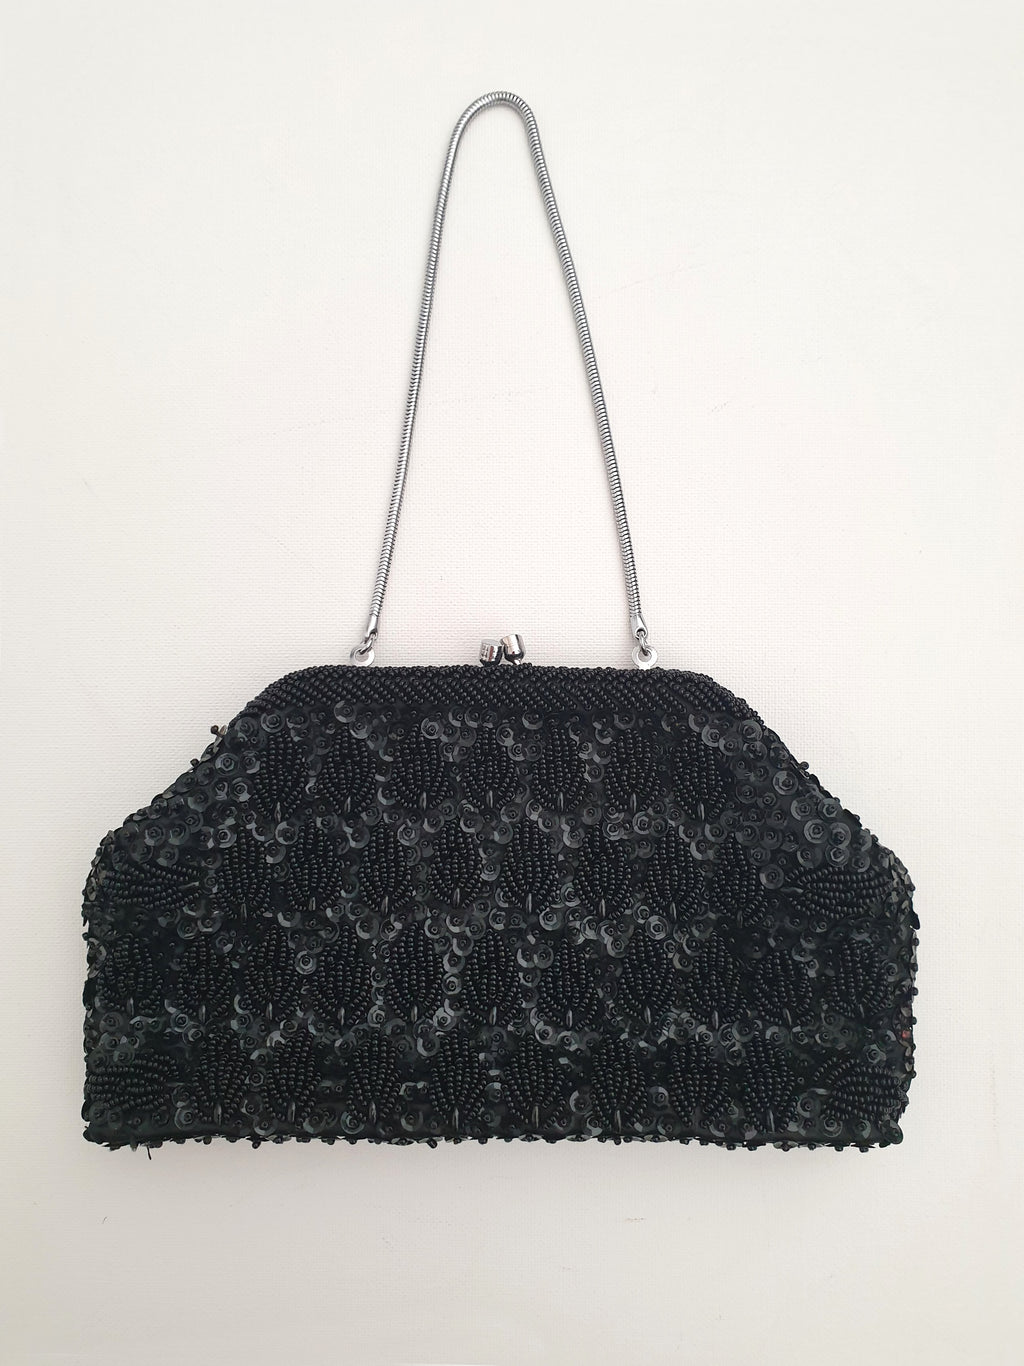 1960s vintage black beaded evening bag or purse